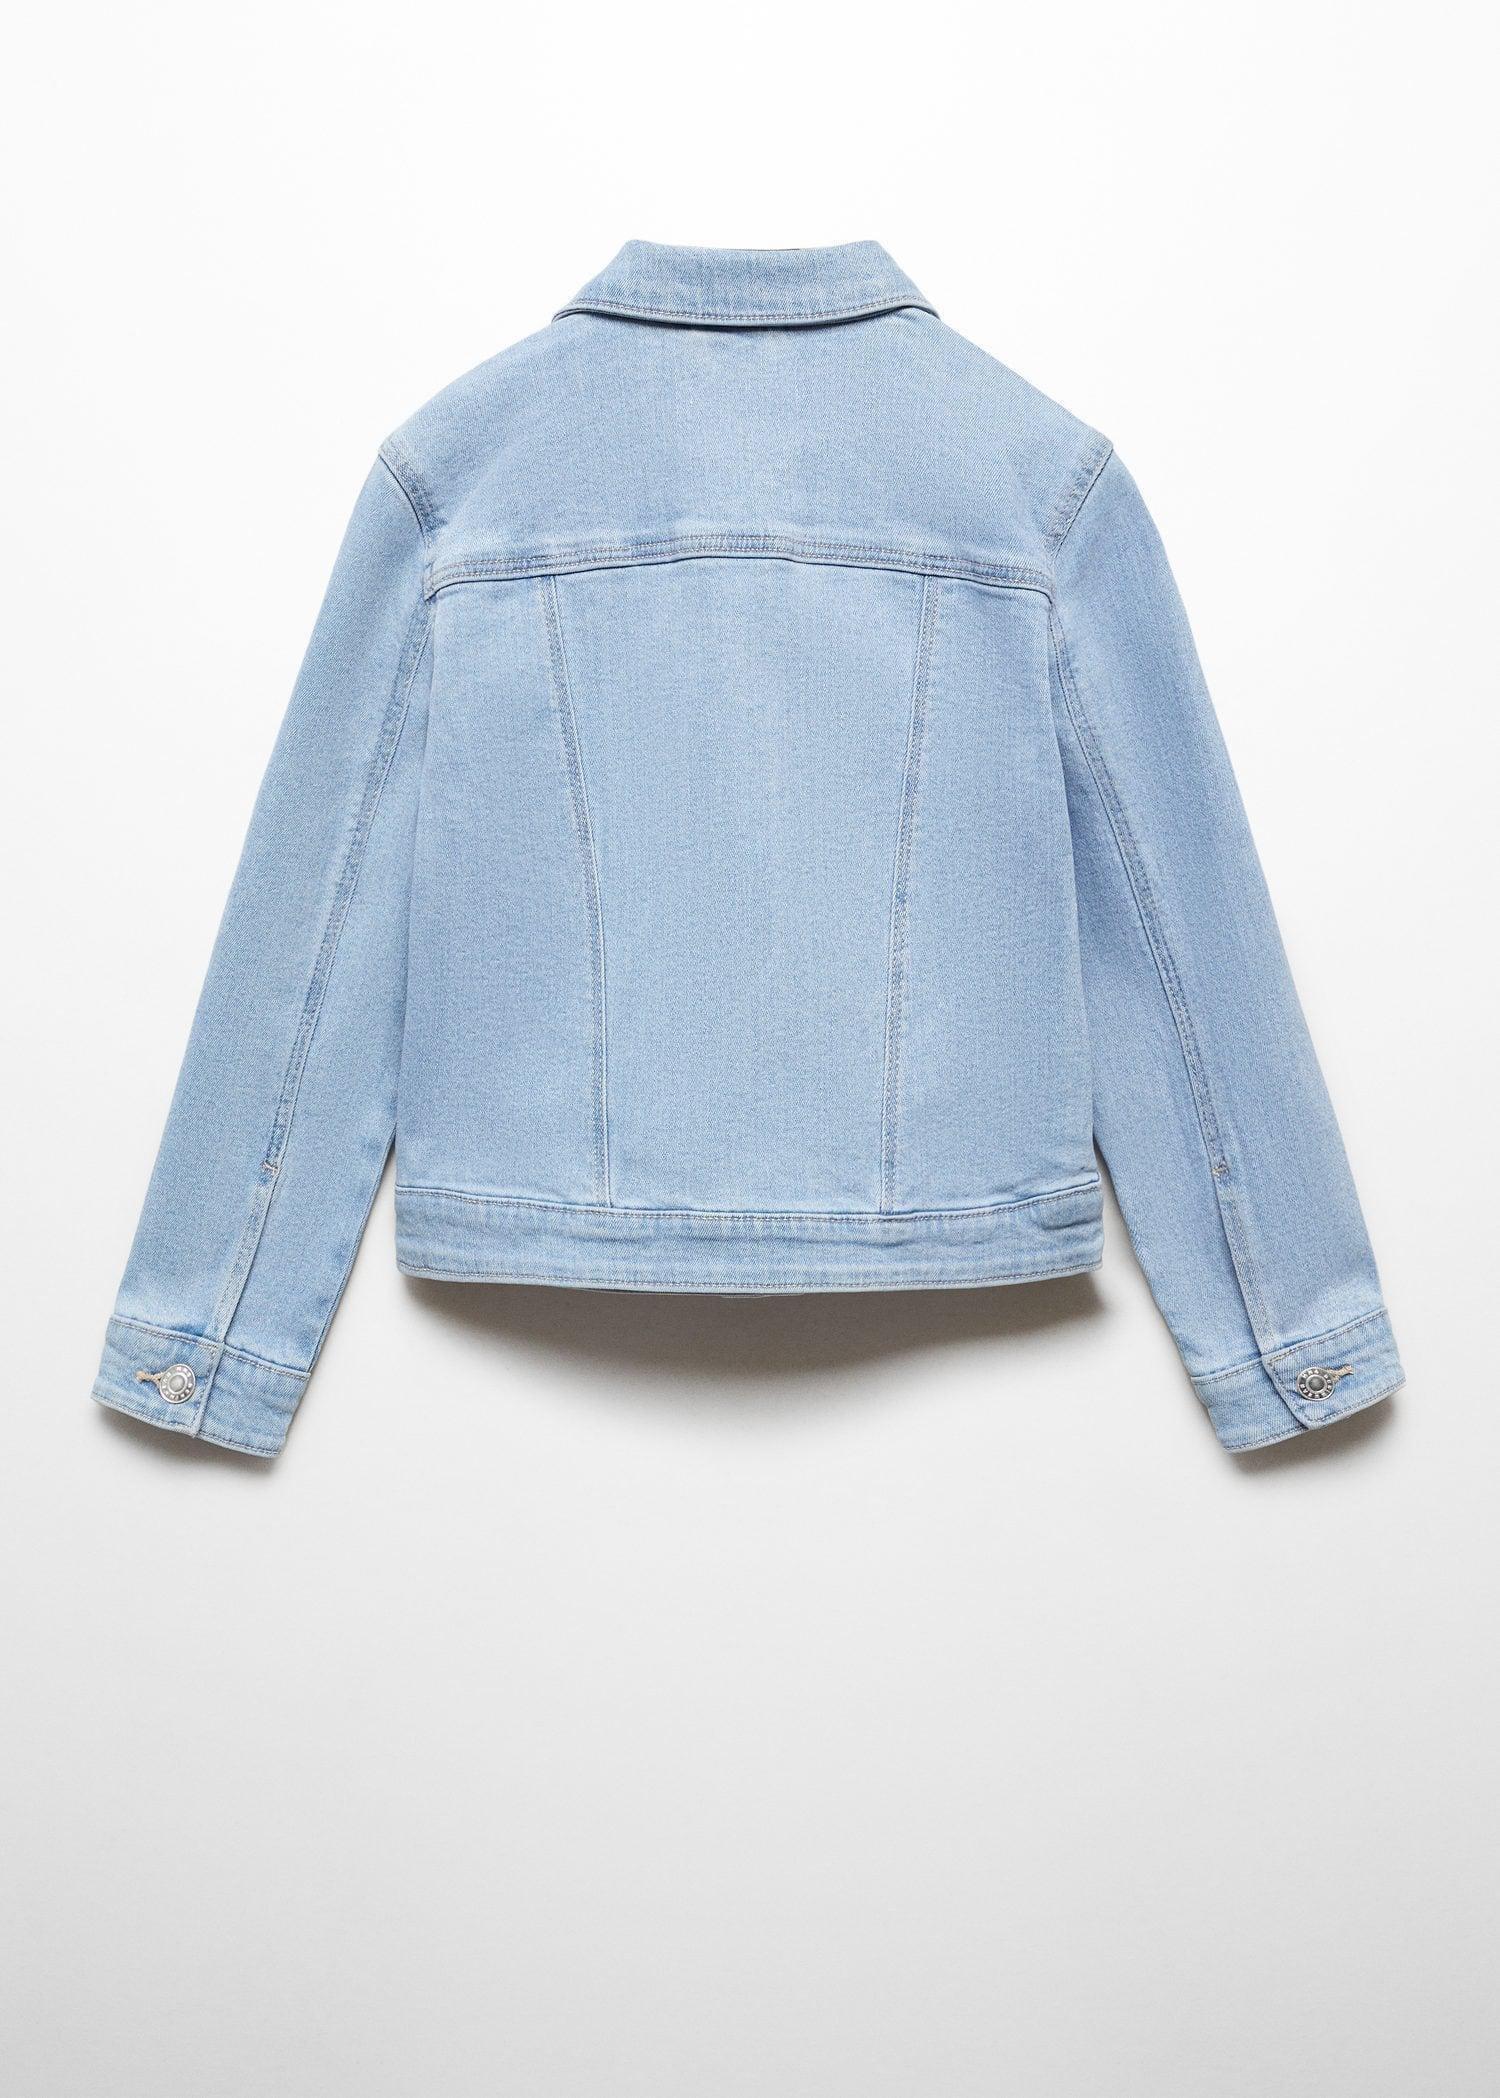 Mango - Blue Denim Cotton Jacket, Kids Girls